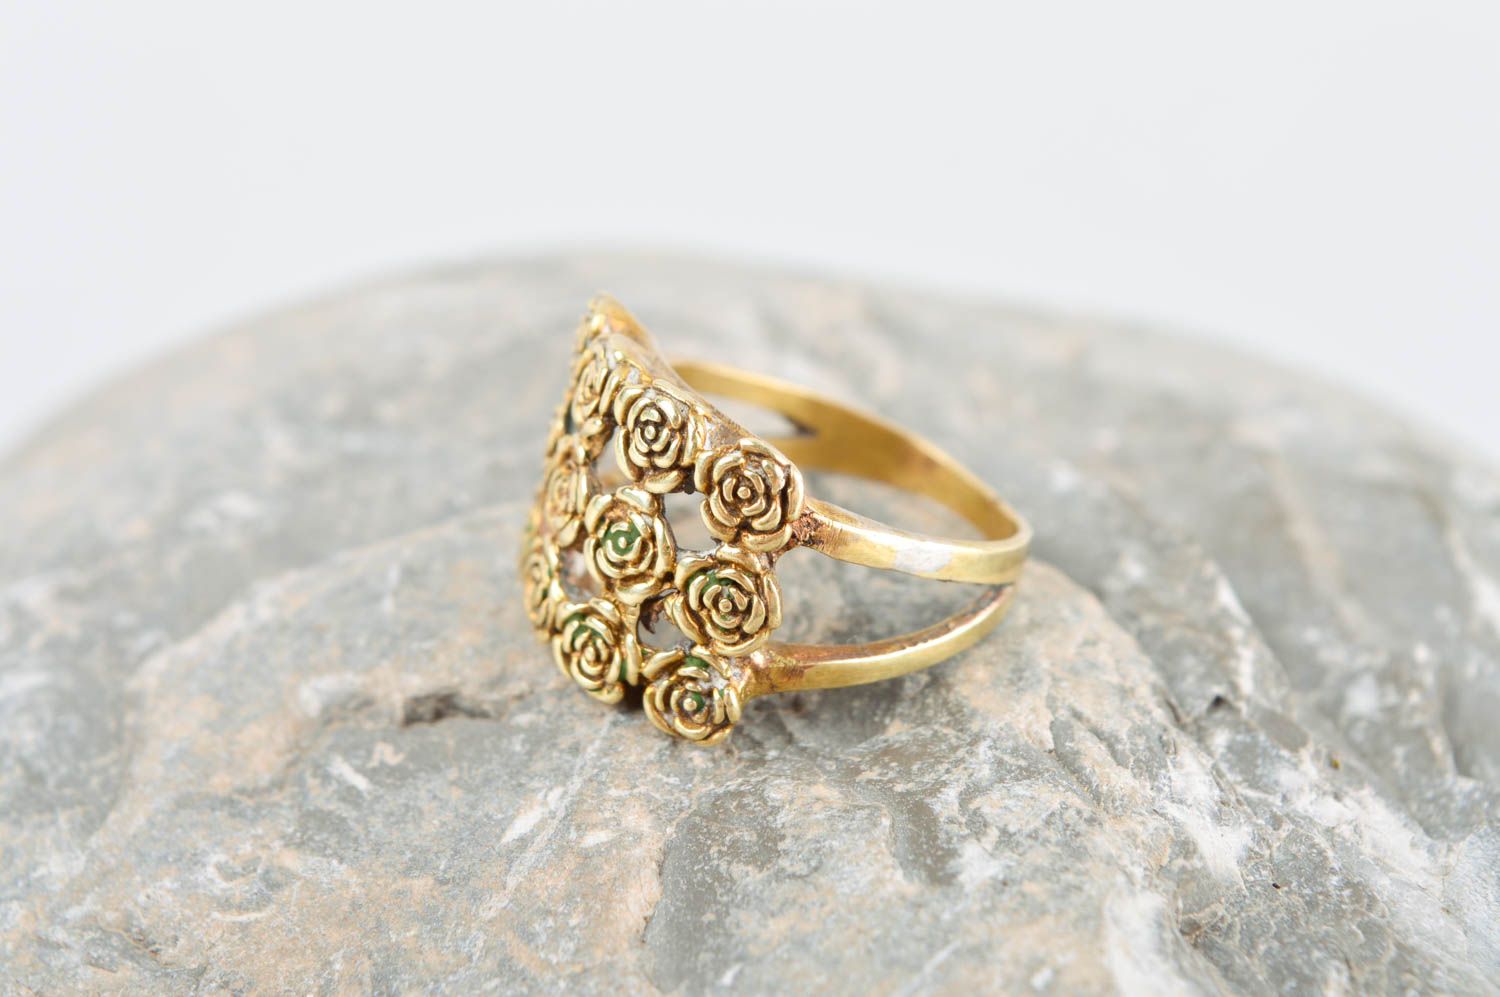 Unusual handmade metal ring fashion trends metal craft artisan jewelry photo 1